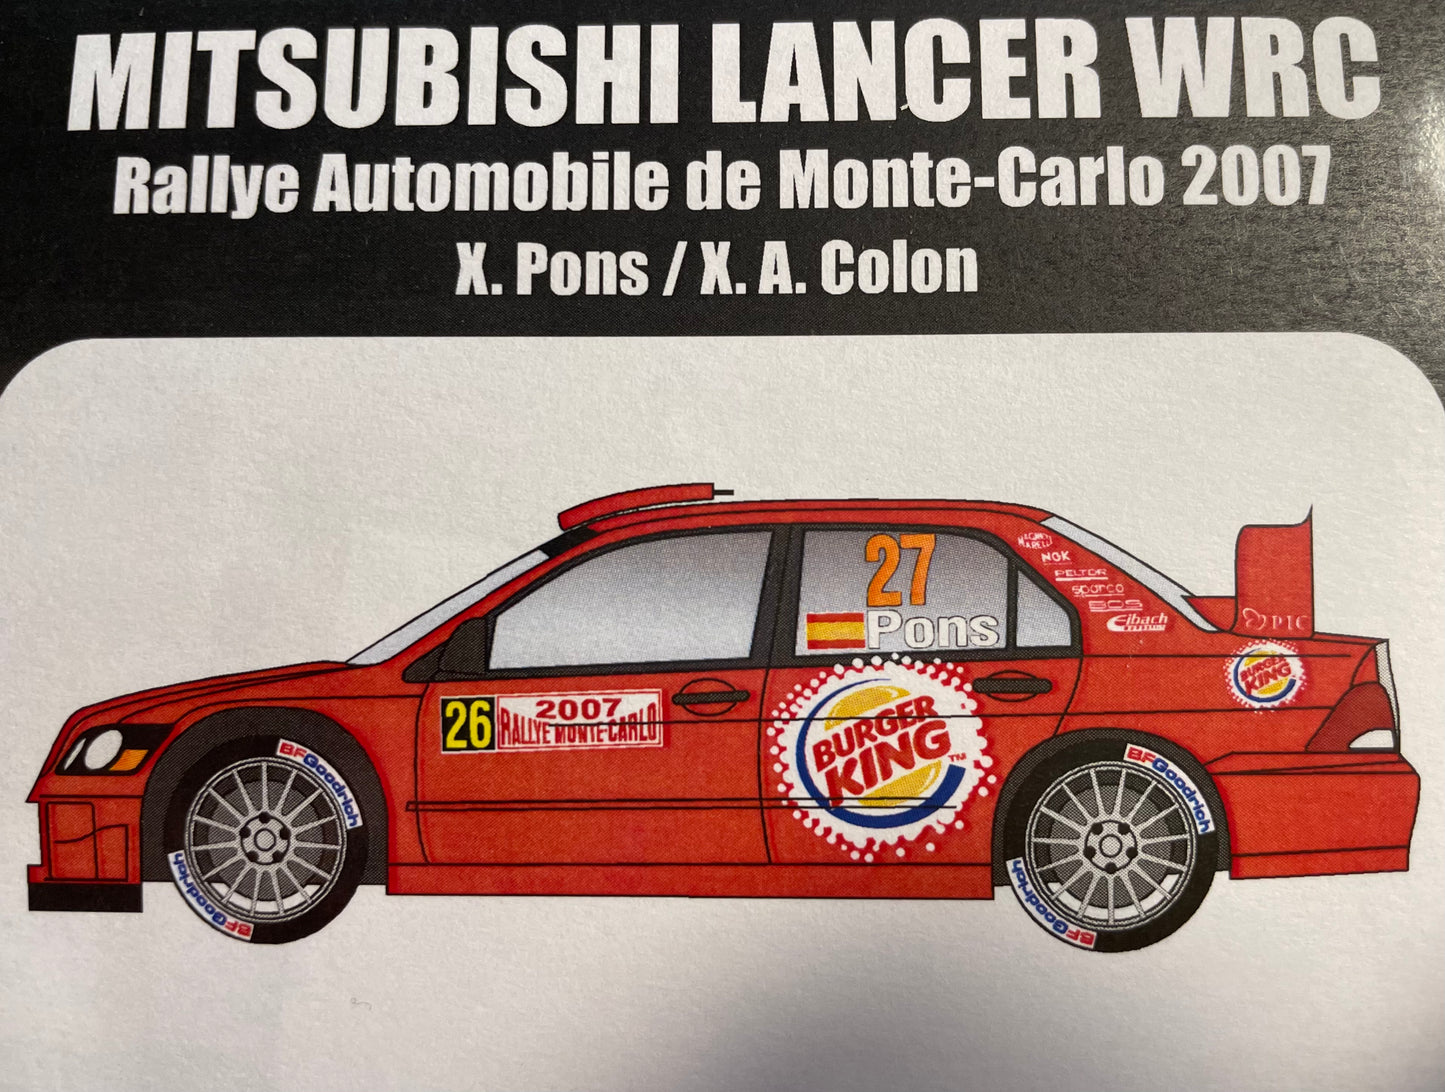 DECALS MITSUBISHI LANCER WRC RALLY MONTE CARLO 2007